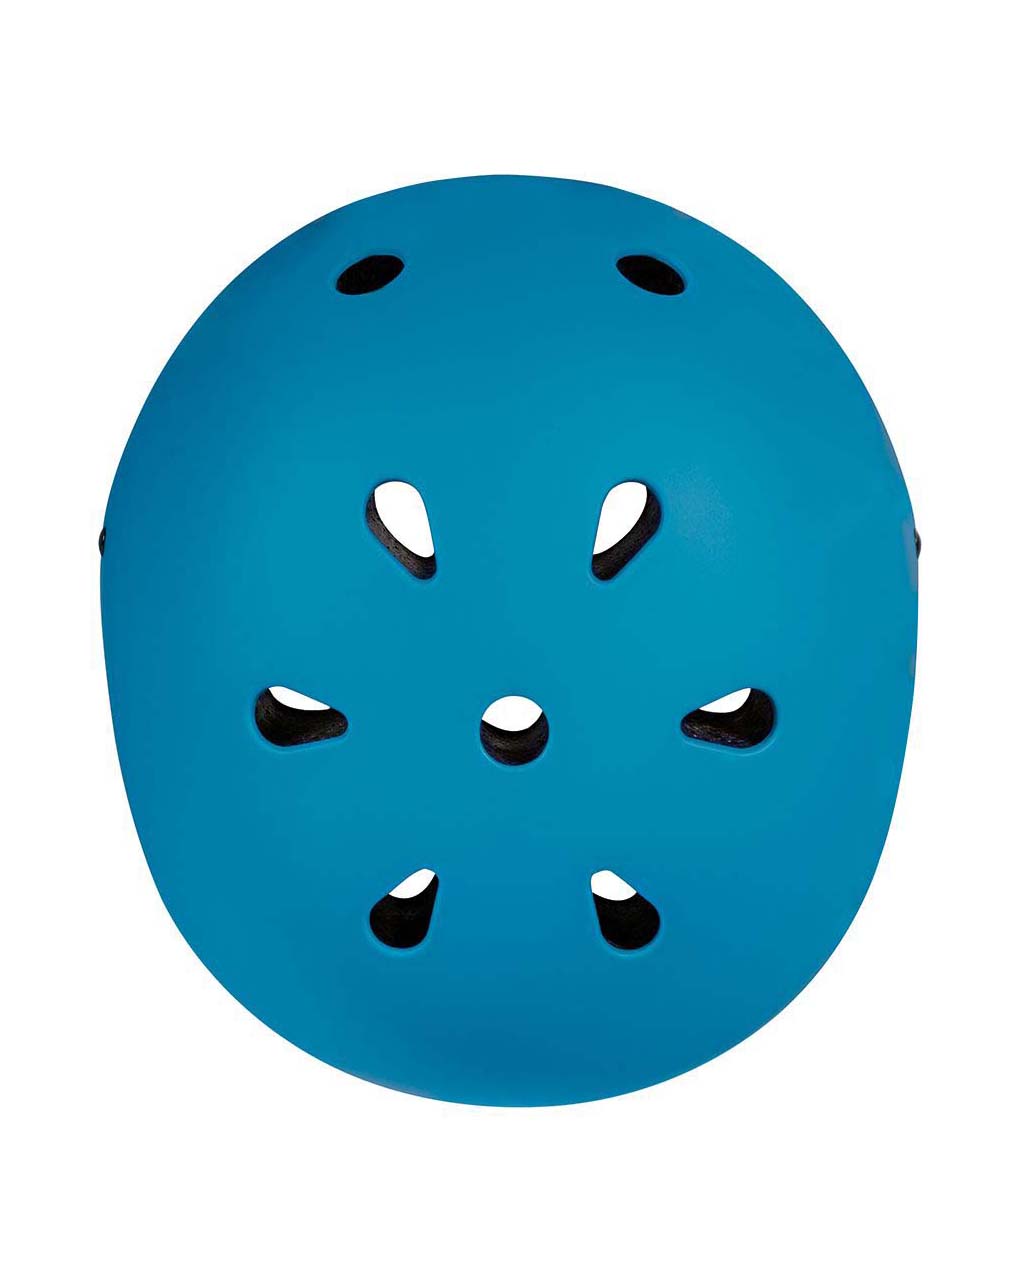 Shoko παιδικό κράνος σε μπλε χρώμα (μέγεθος s-m) 5004-50601